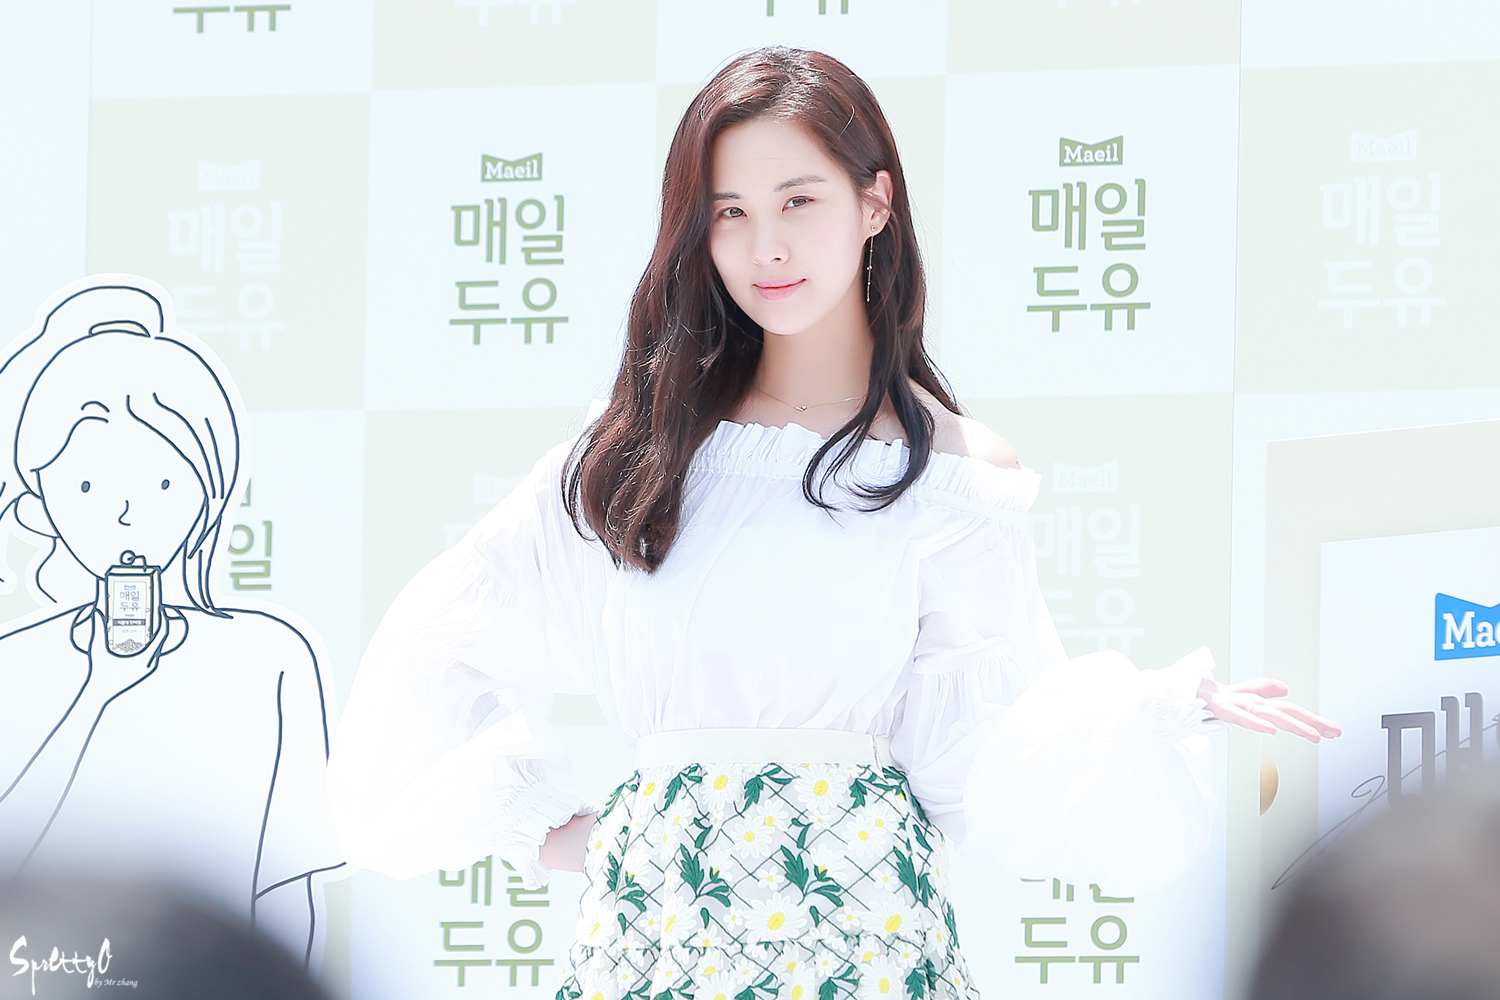  [PIC][03-06-2017]SeoHyun tham dự sự kiện “City Forestival - Maeil Duyou 'Confidence Diary'” vào chiều nay - Page 2 2776824759329B912E04F1